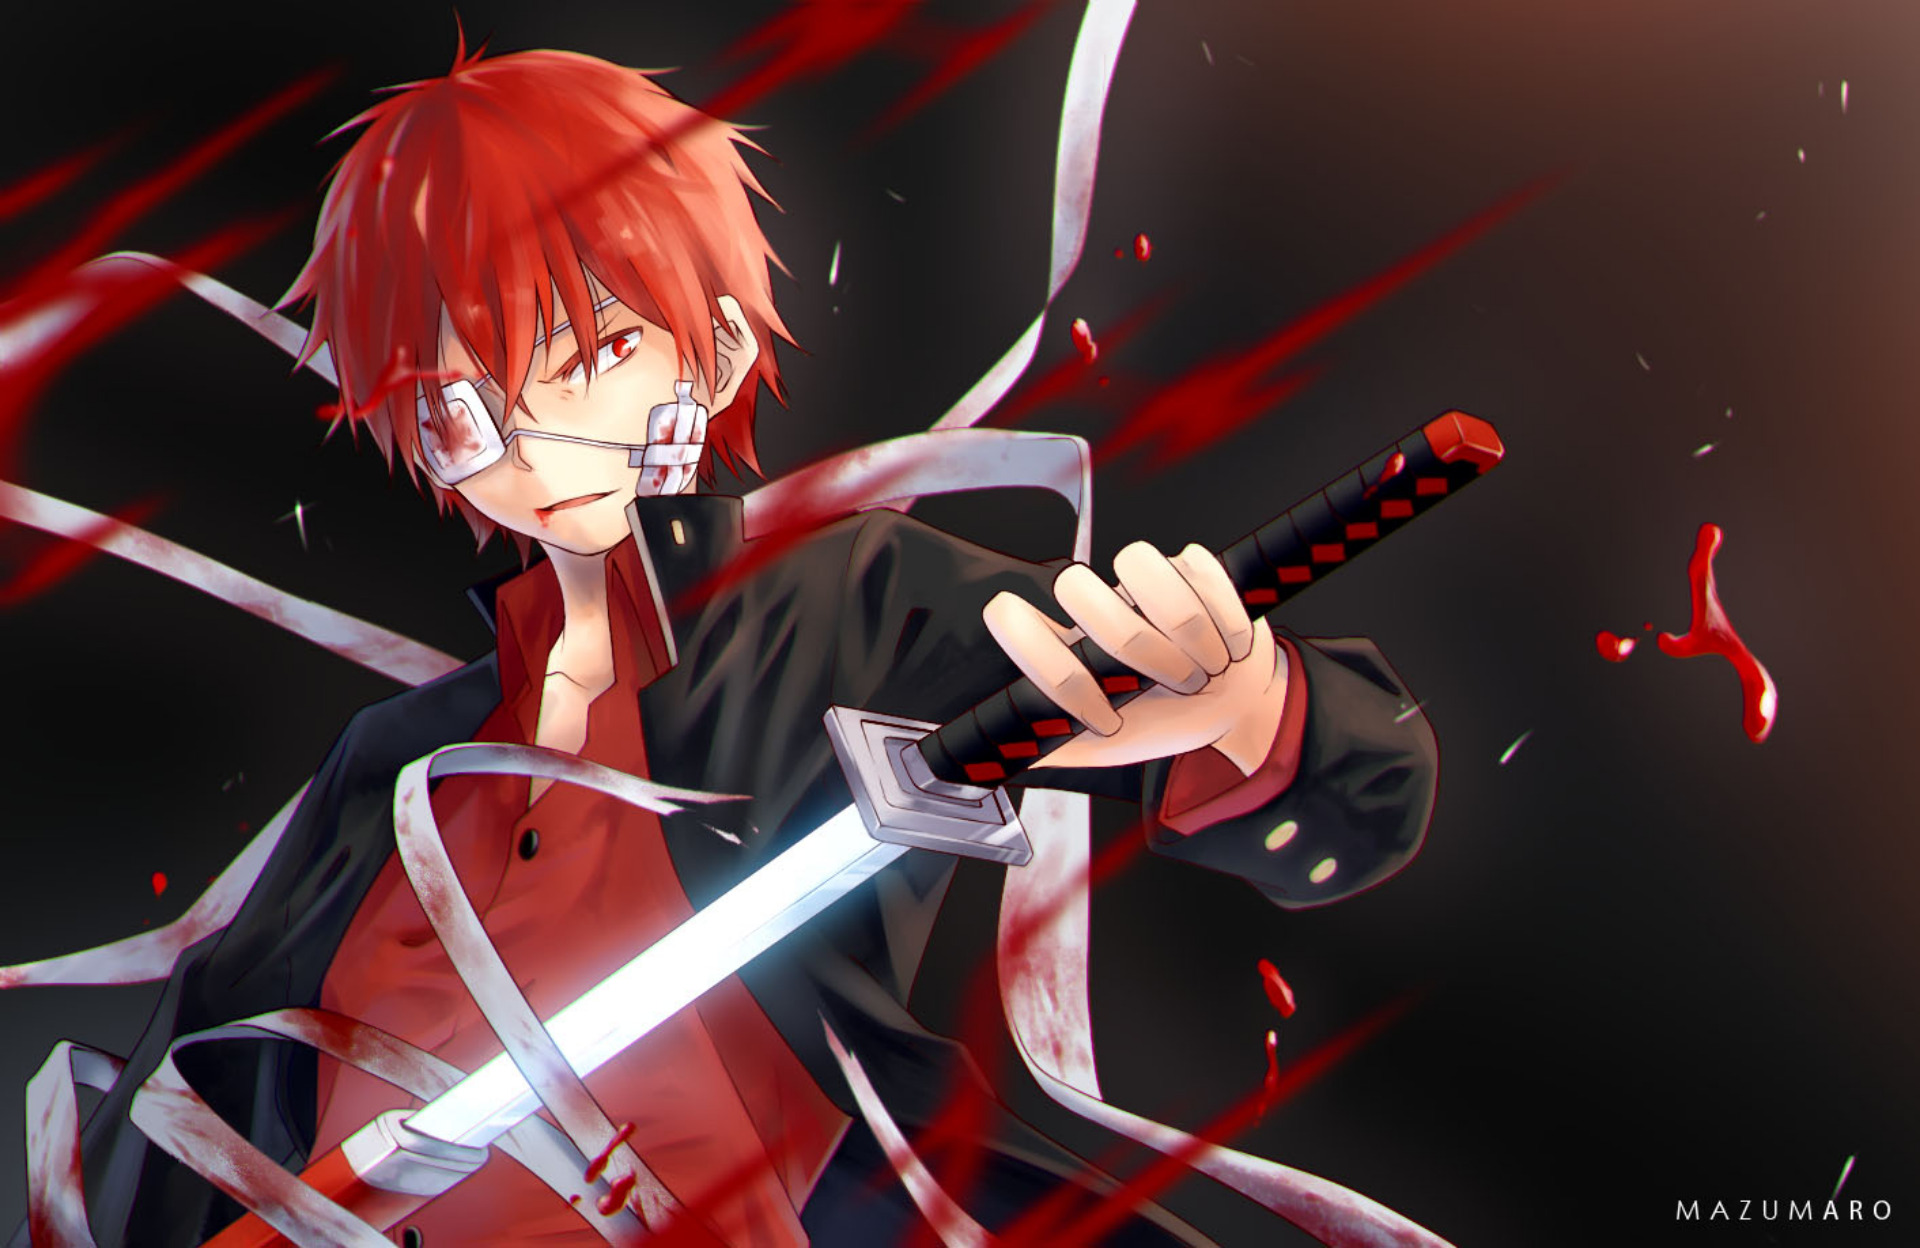 Cool handsome and red hair anime 2021071 on animeshercom